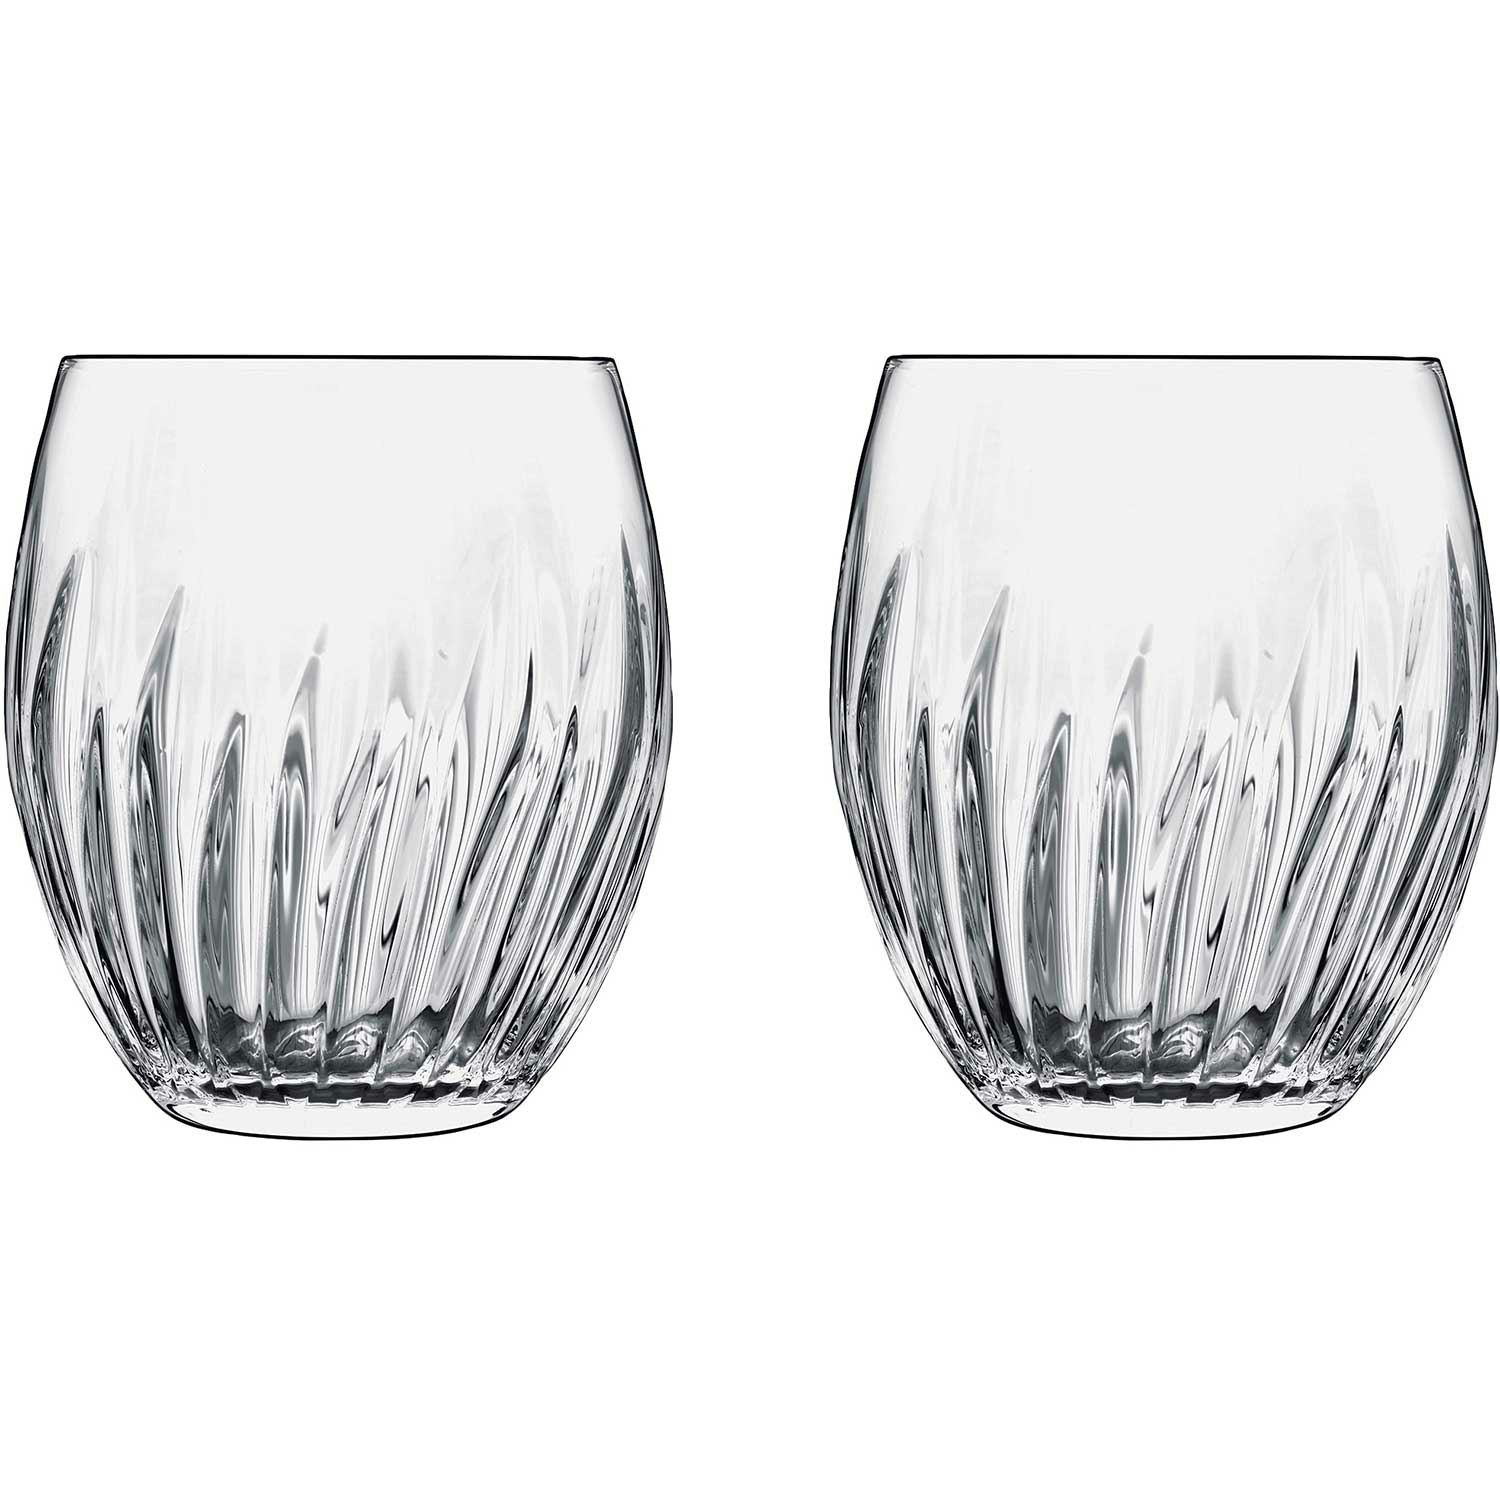 Lempi Drinking Glass 34 cl 4 pcs, Clear - Iittala @ RoyalDesign